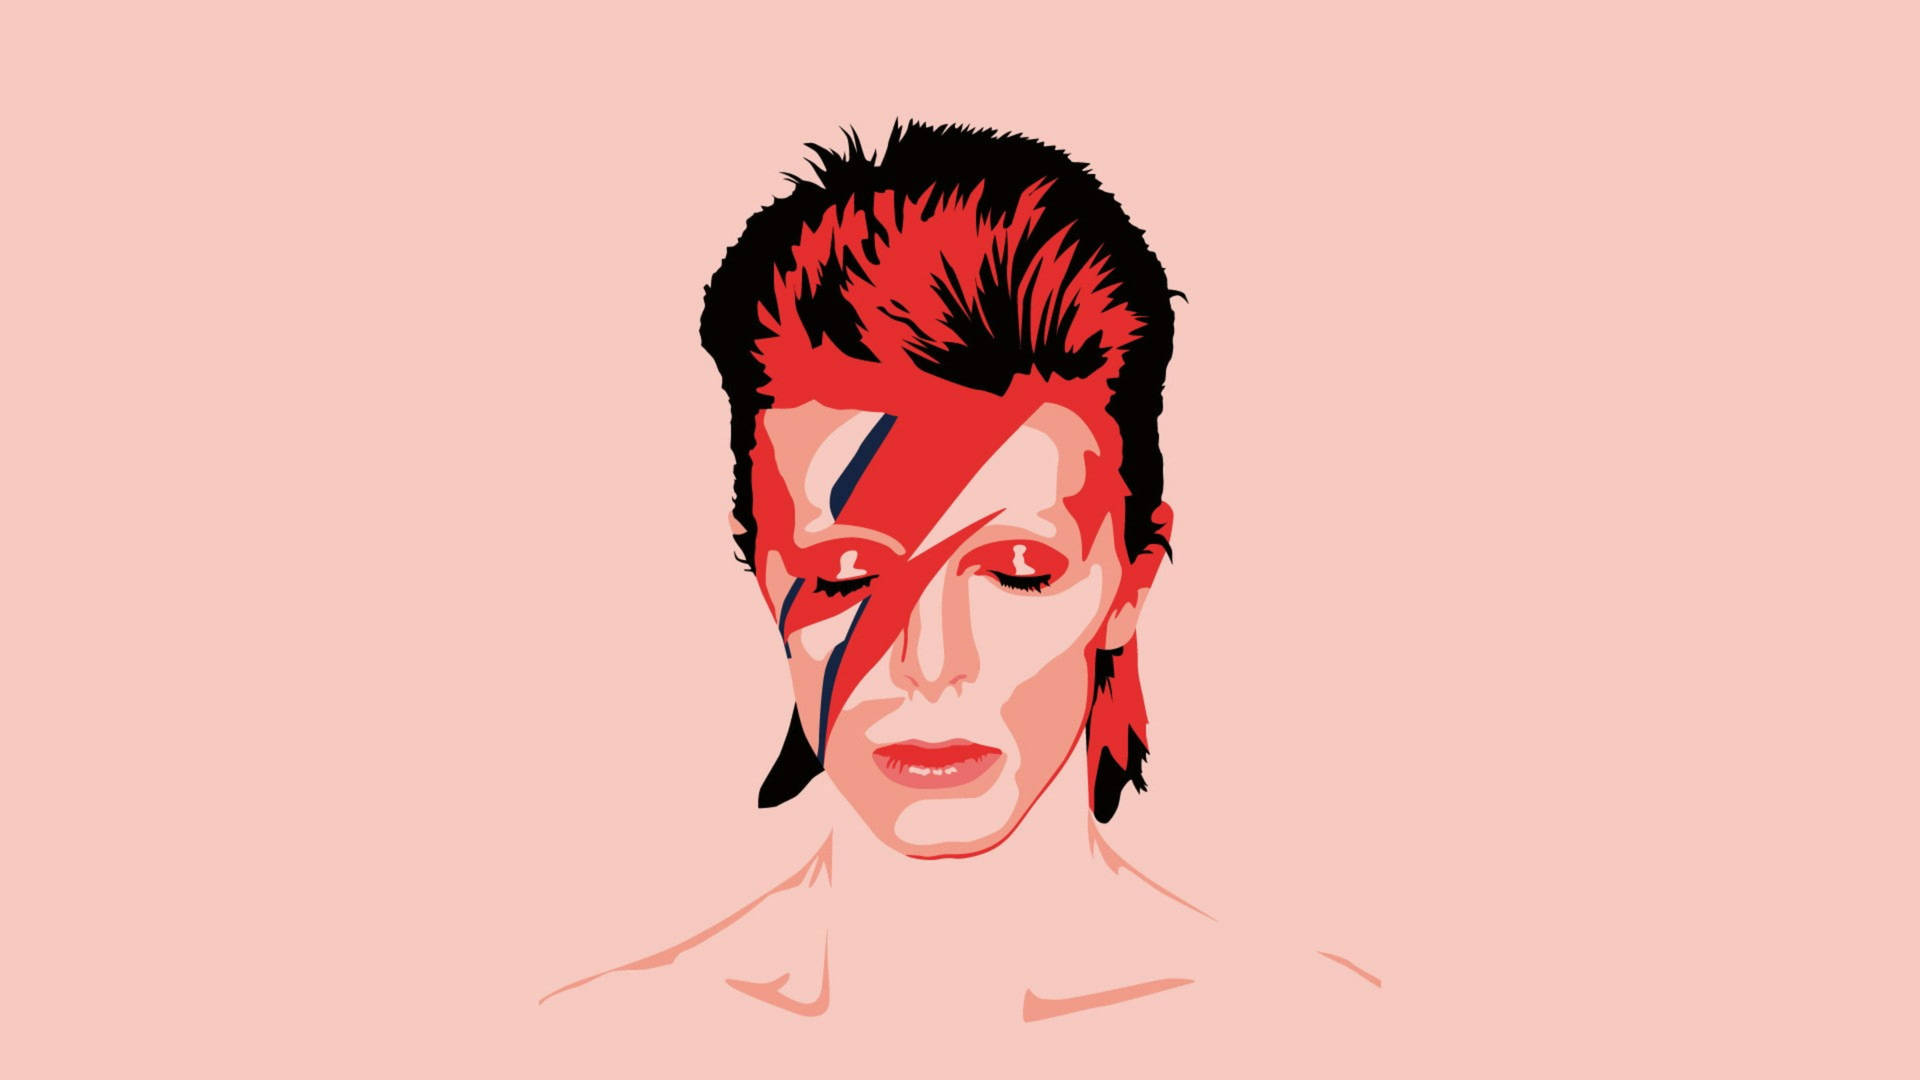 David Bowie Wallpaper Images